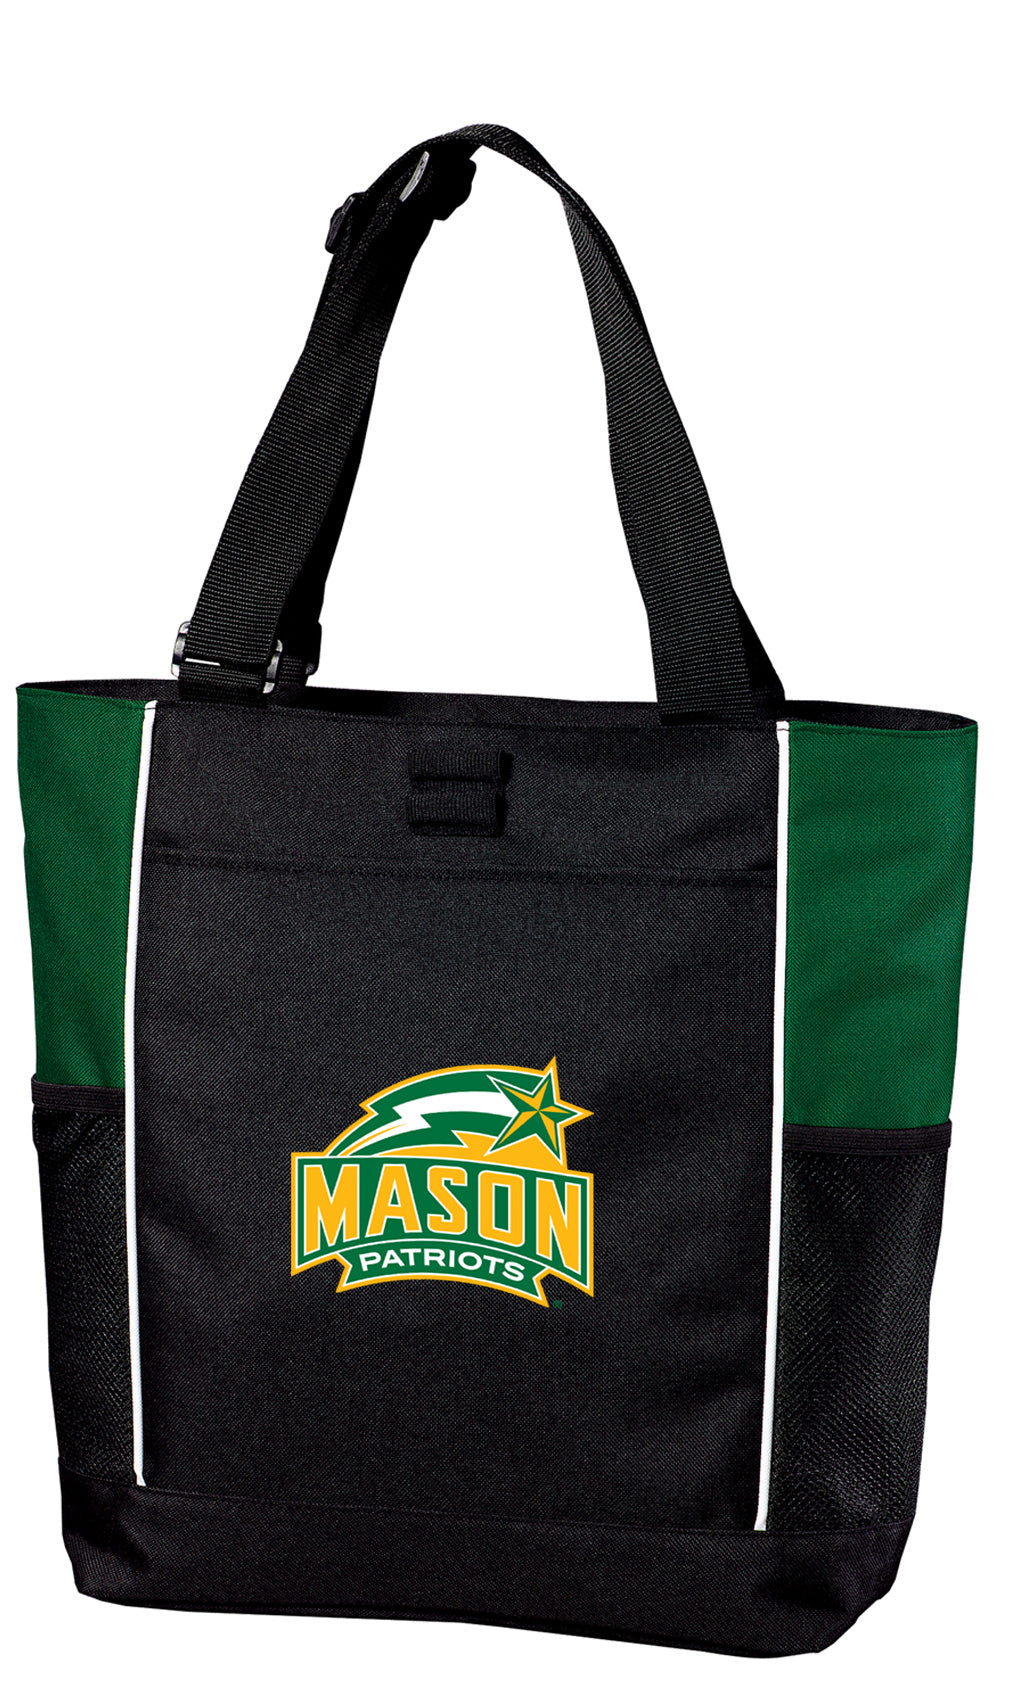 George Mason University Tote Bag GMU Patriots Carryall Tote